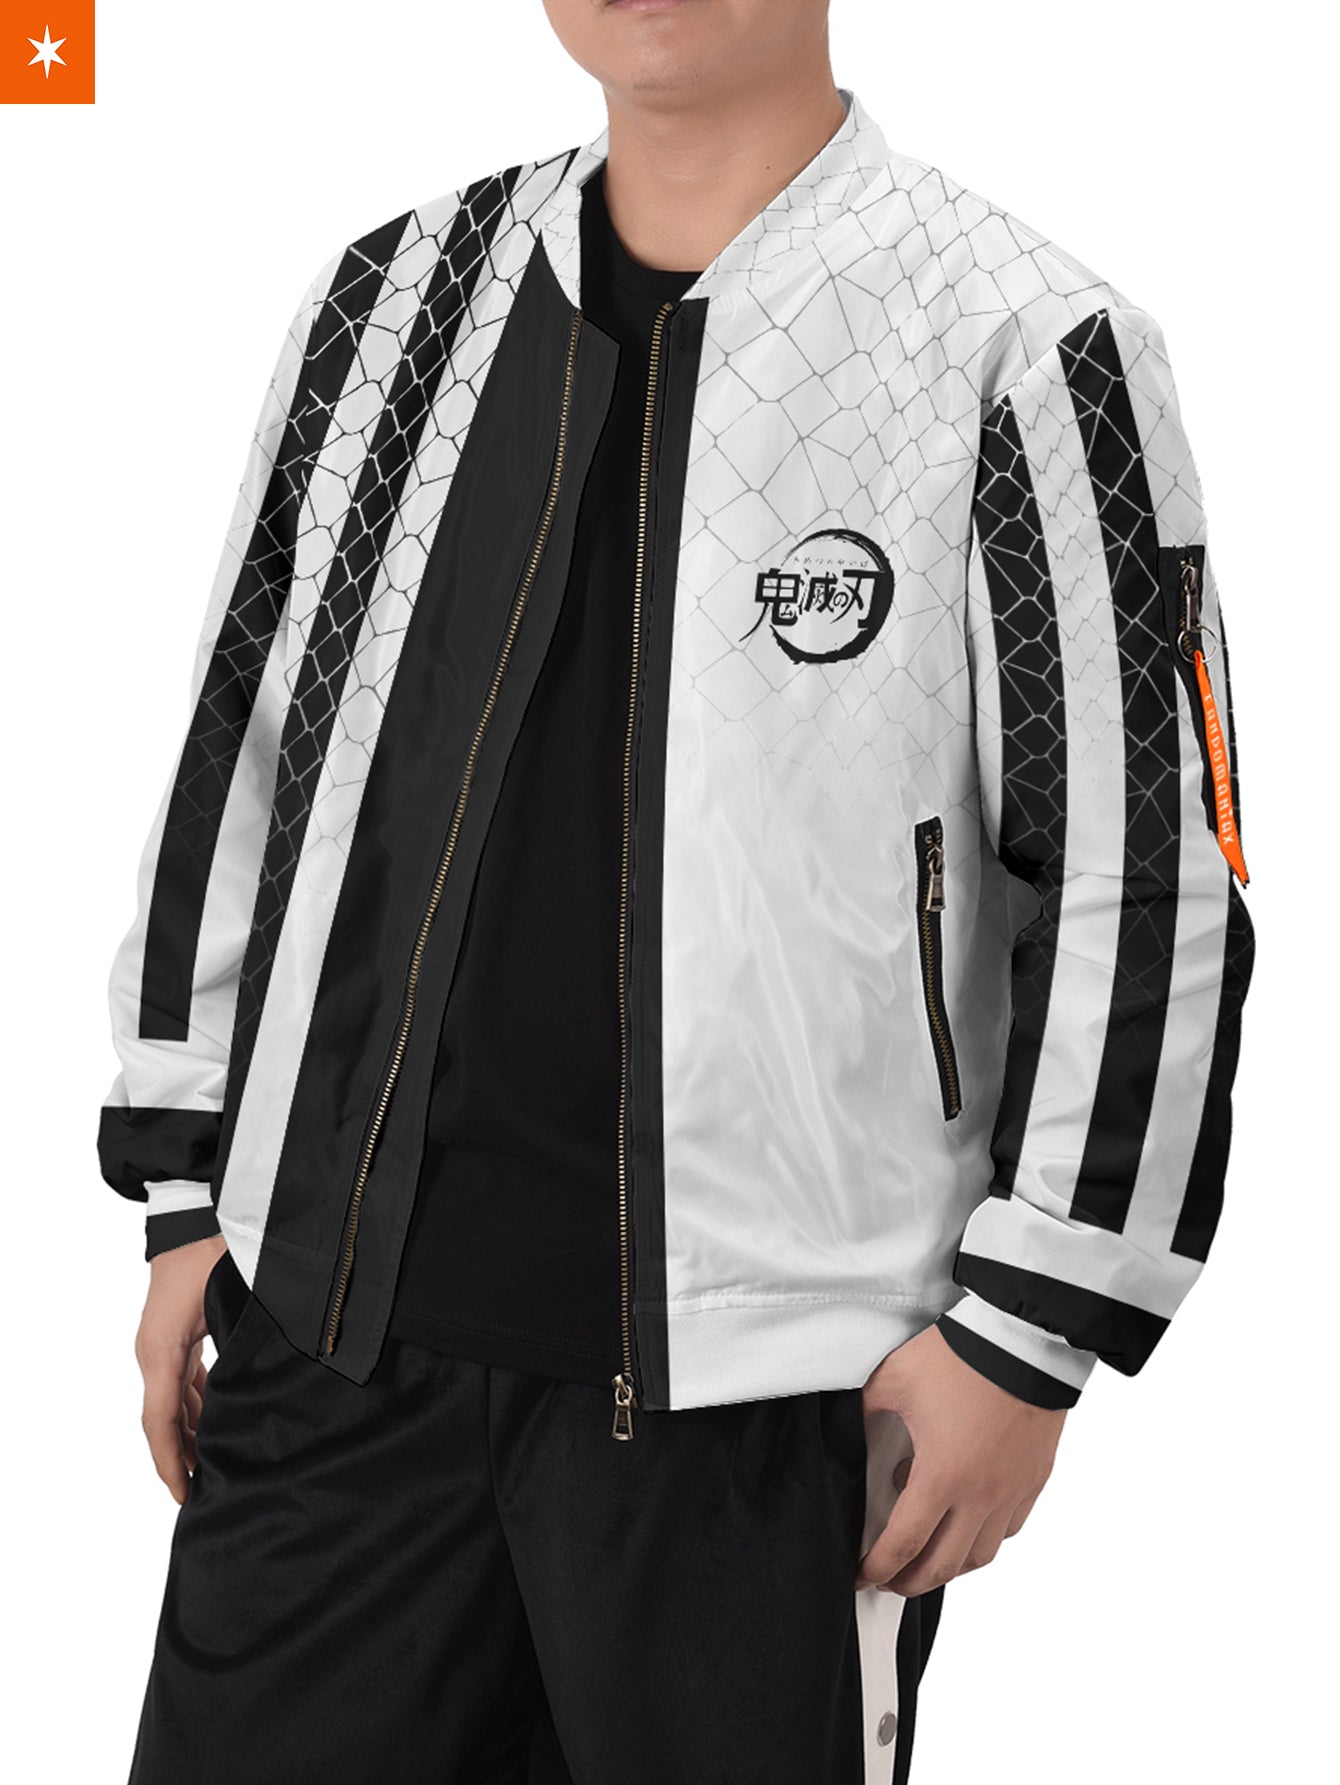 New Men's Black Jacket Genuine Soft Lambskin Stylish Slim Fit Bomber Jacket  318 | eBay